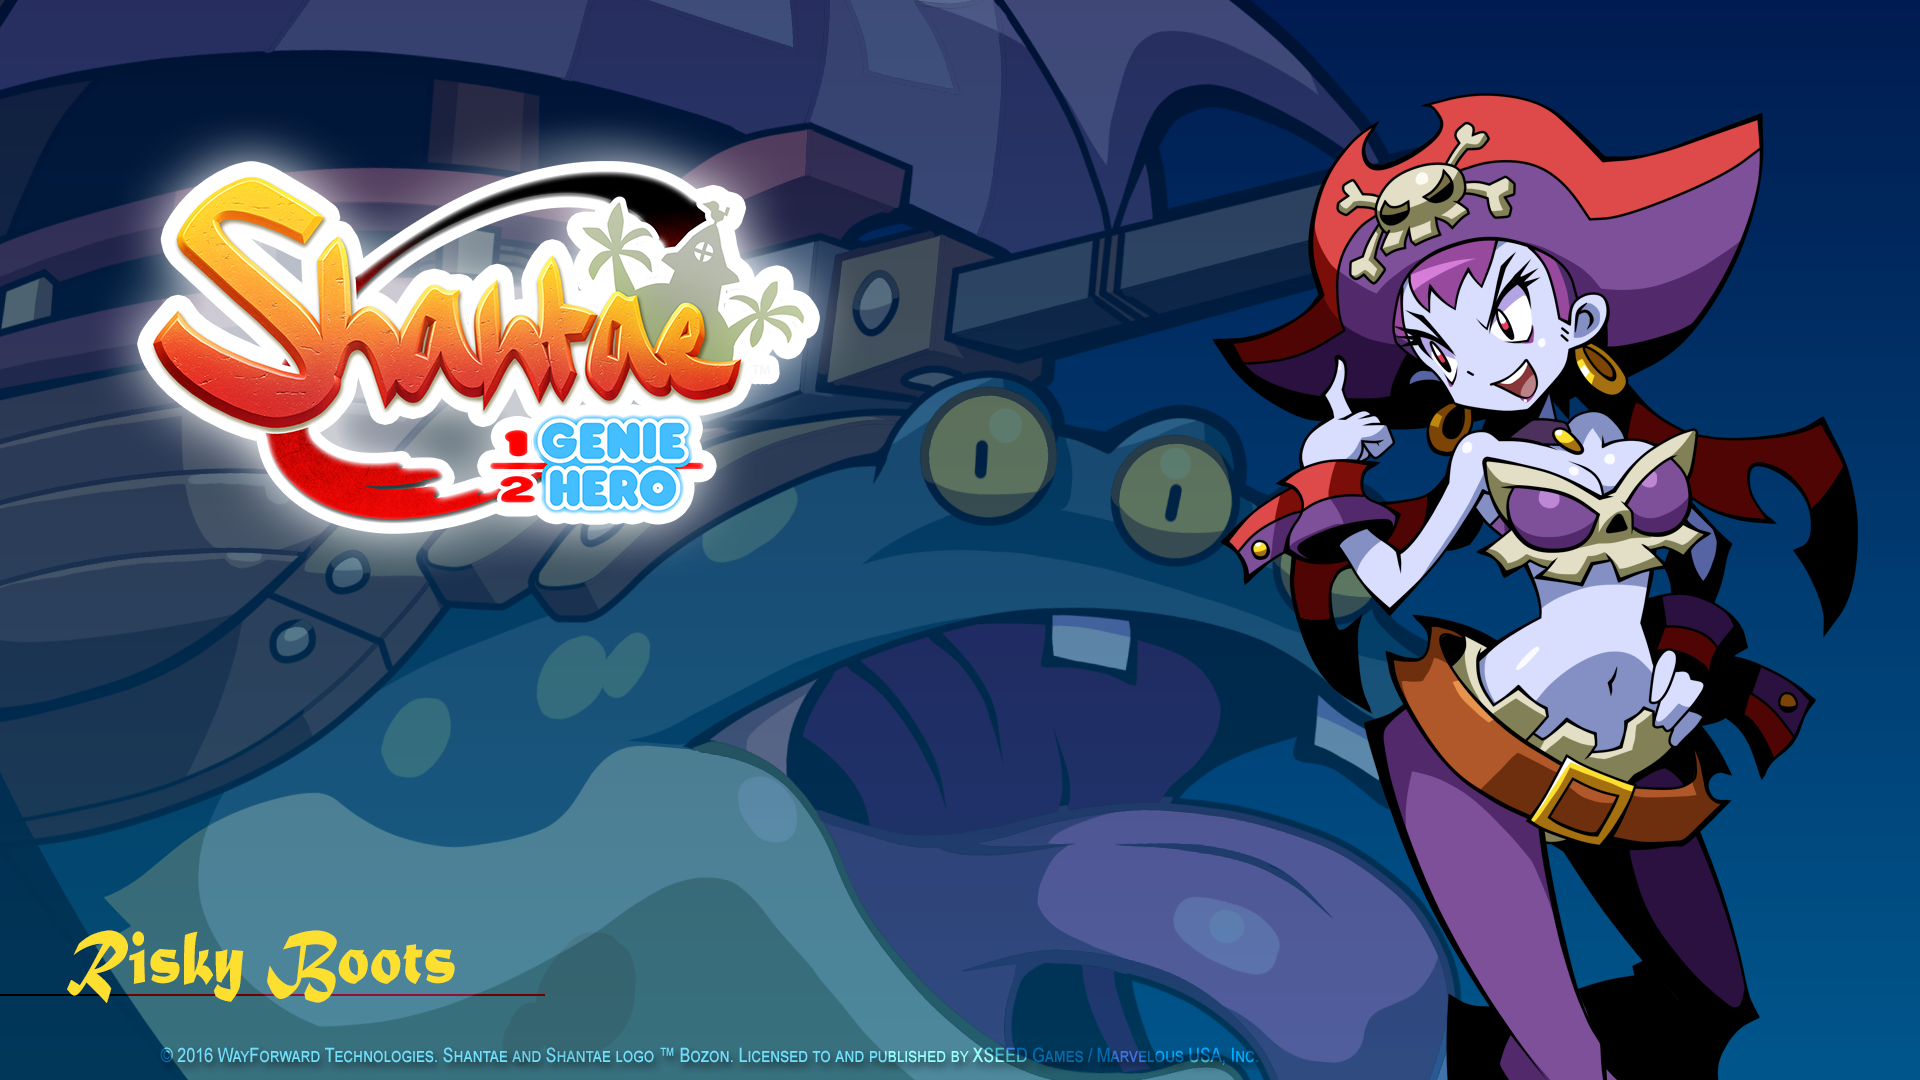 Wallpaper ID 408746  Video Game Shantae HalfGenie Hero Phone Wallpaper   1080x1920 free download